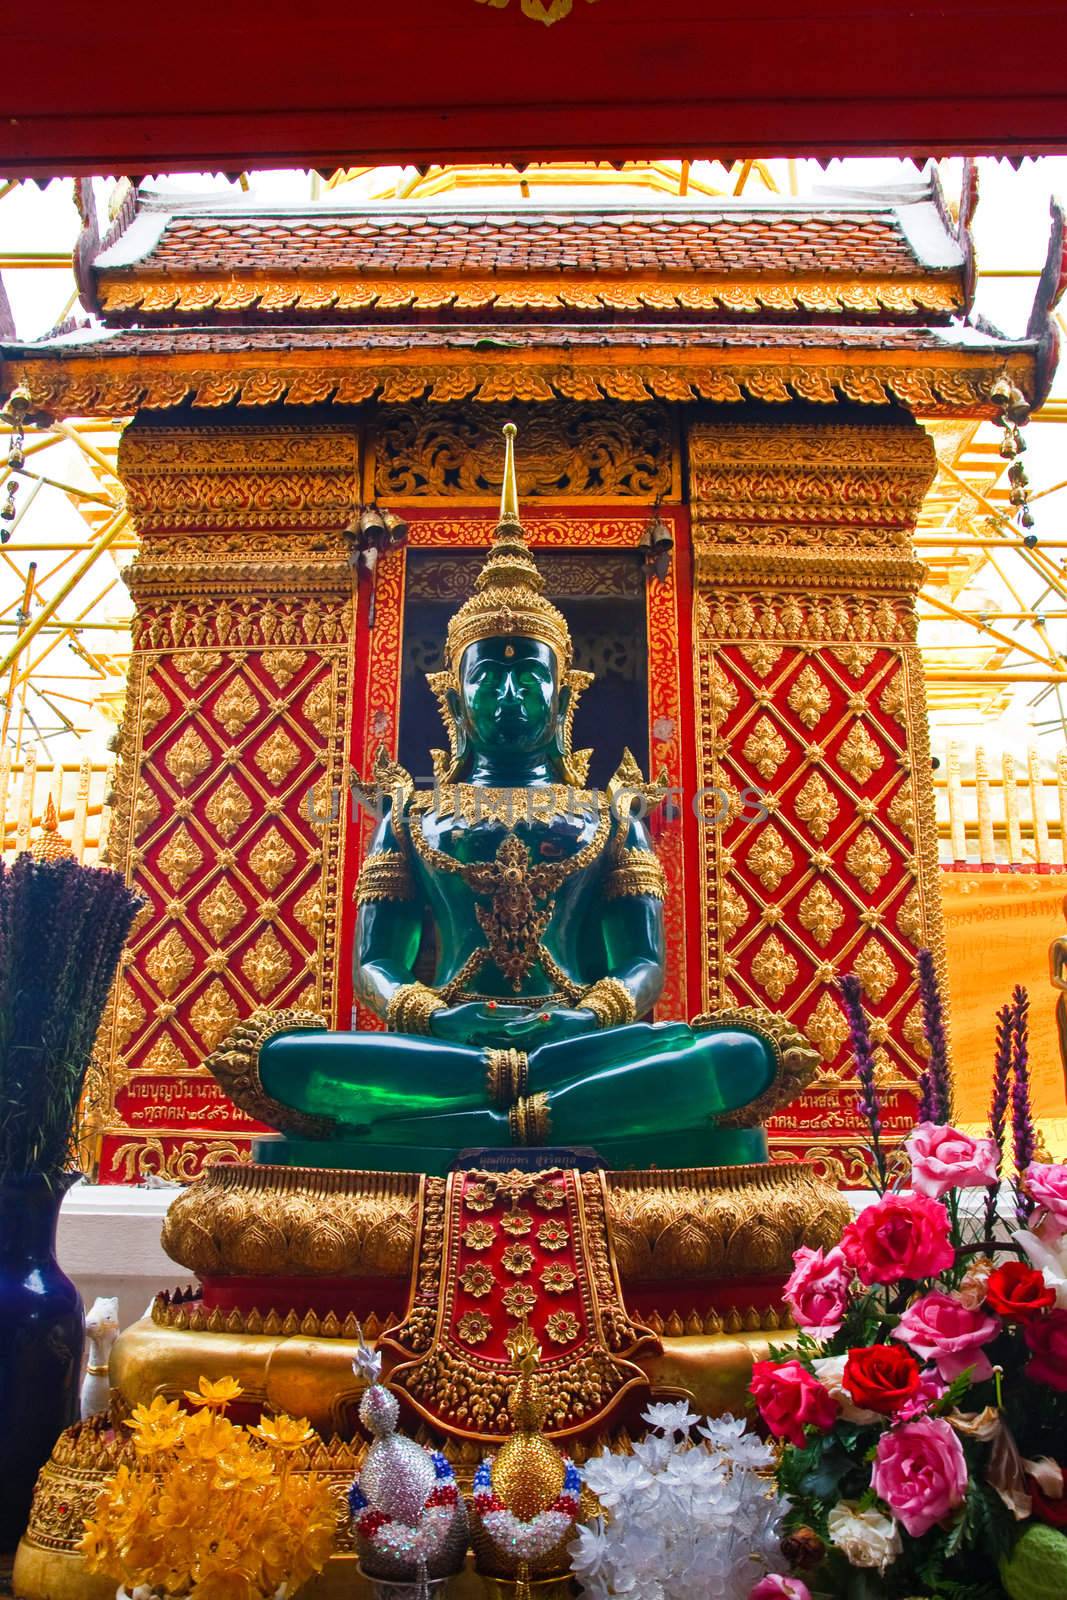 Emerald Buddha image in Wat Doi suthep temple